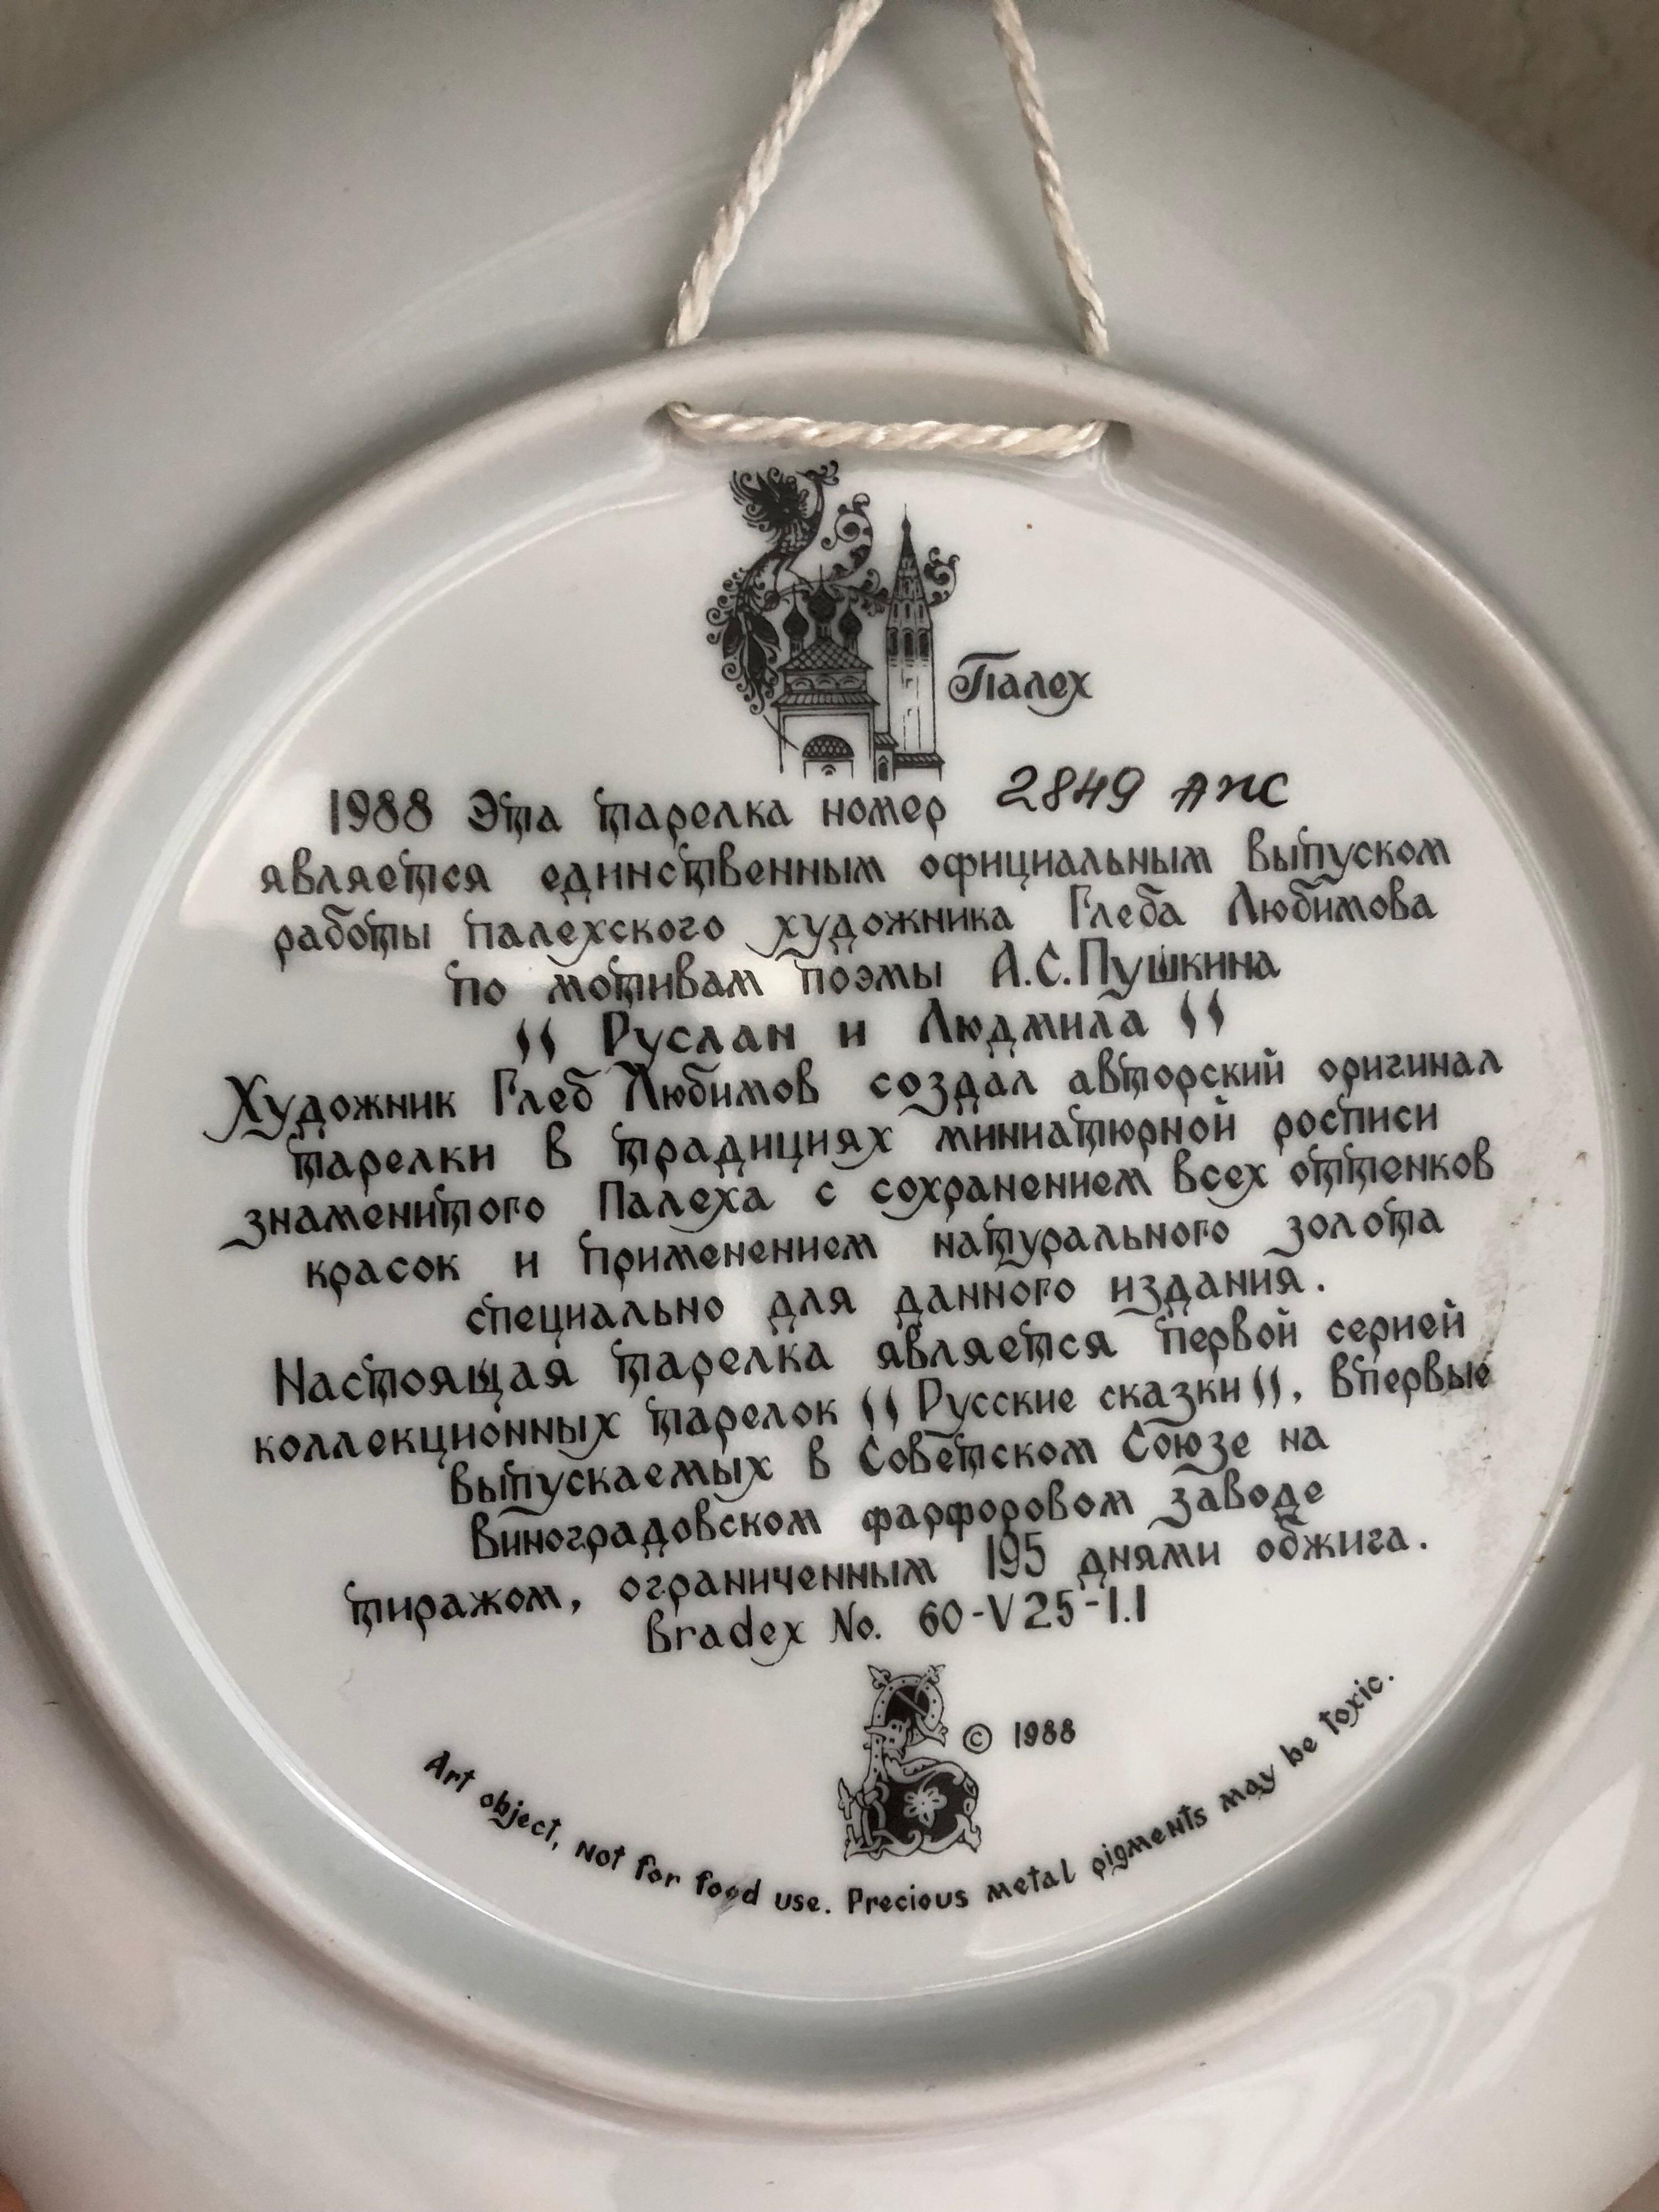 ruslan and ludmilla plate